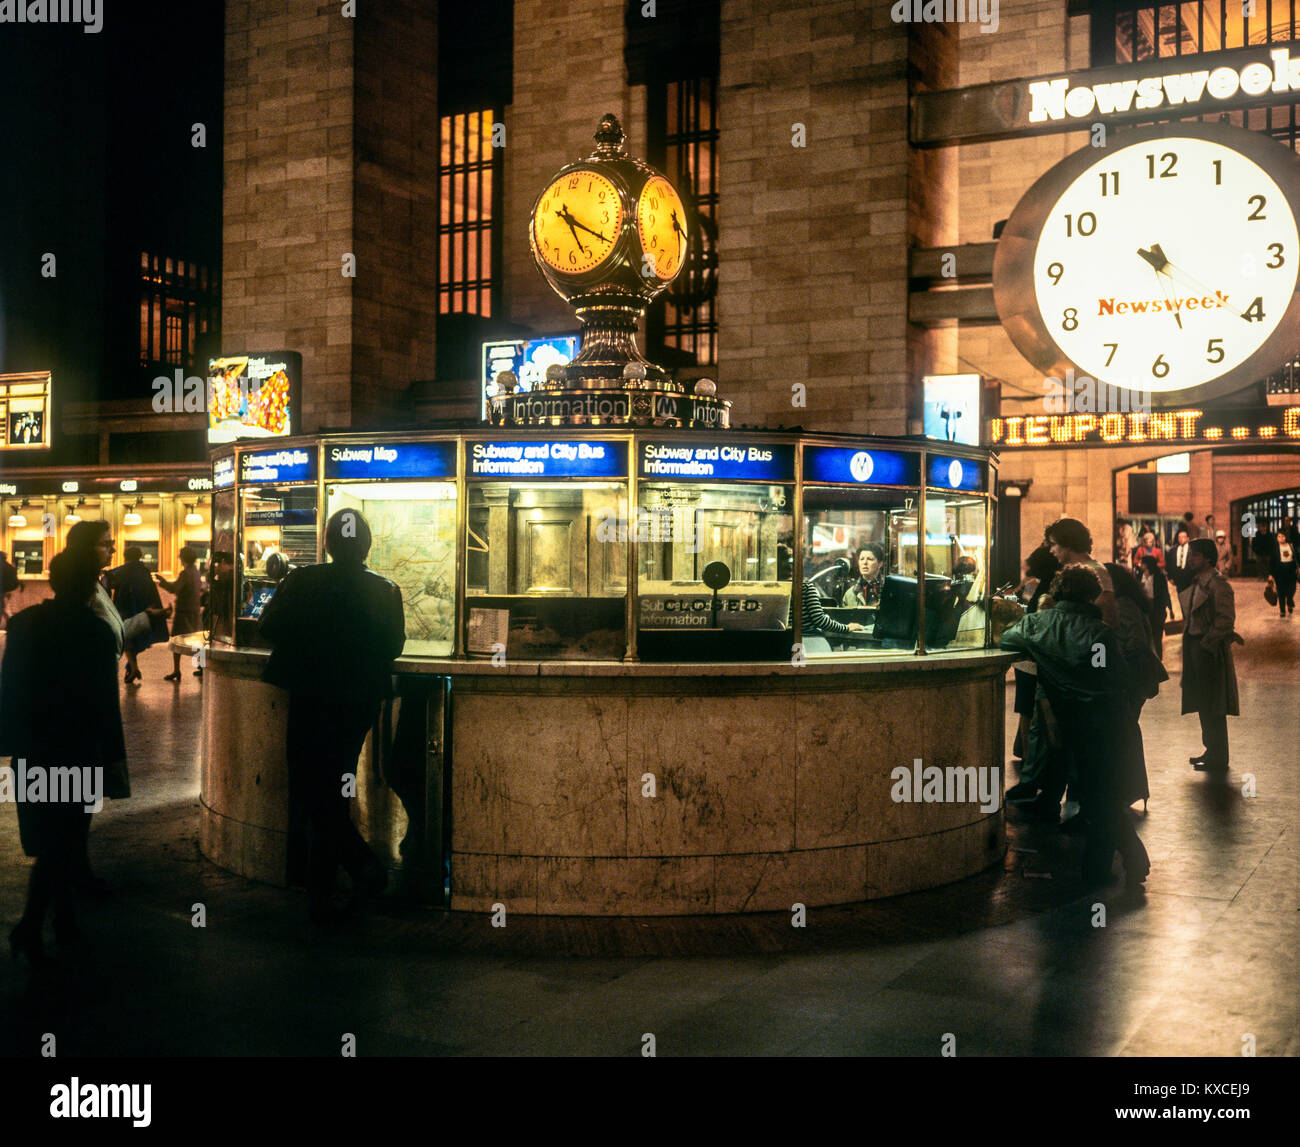 New York 1980s, Grand Central train station main concourse, subway & city bus information booth, clocks, Manhattan, New York City, NY, NYC, USA, Stock Photo